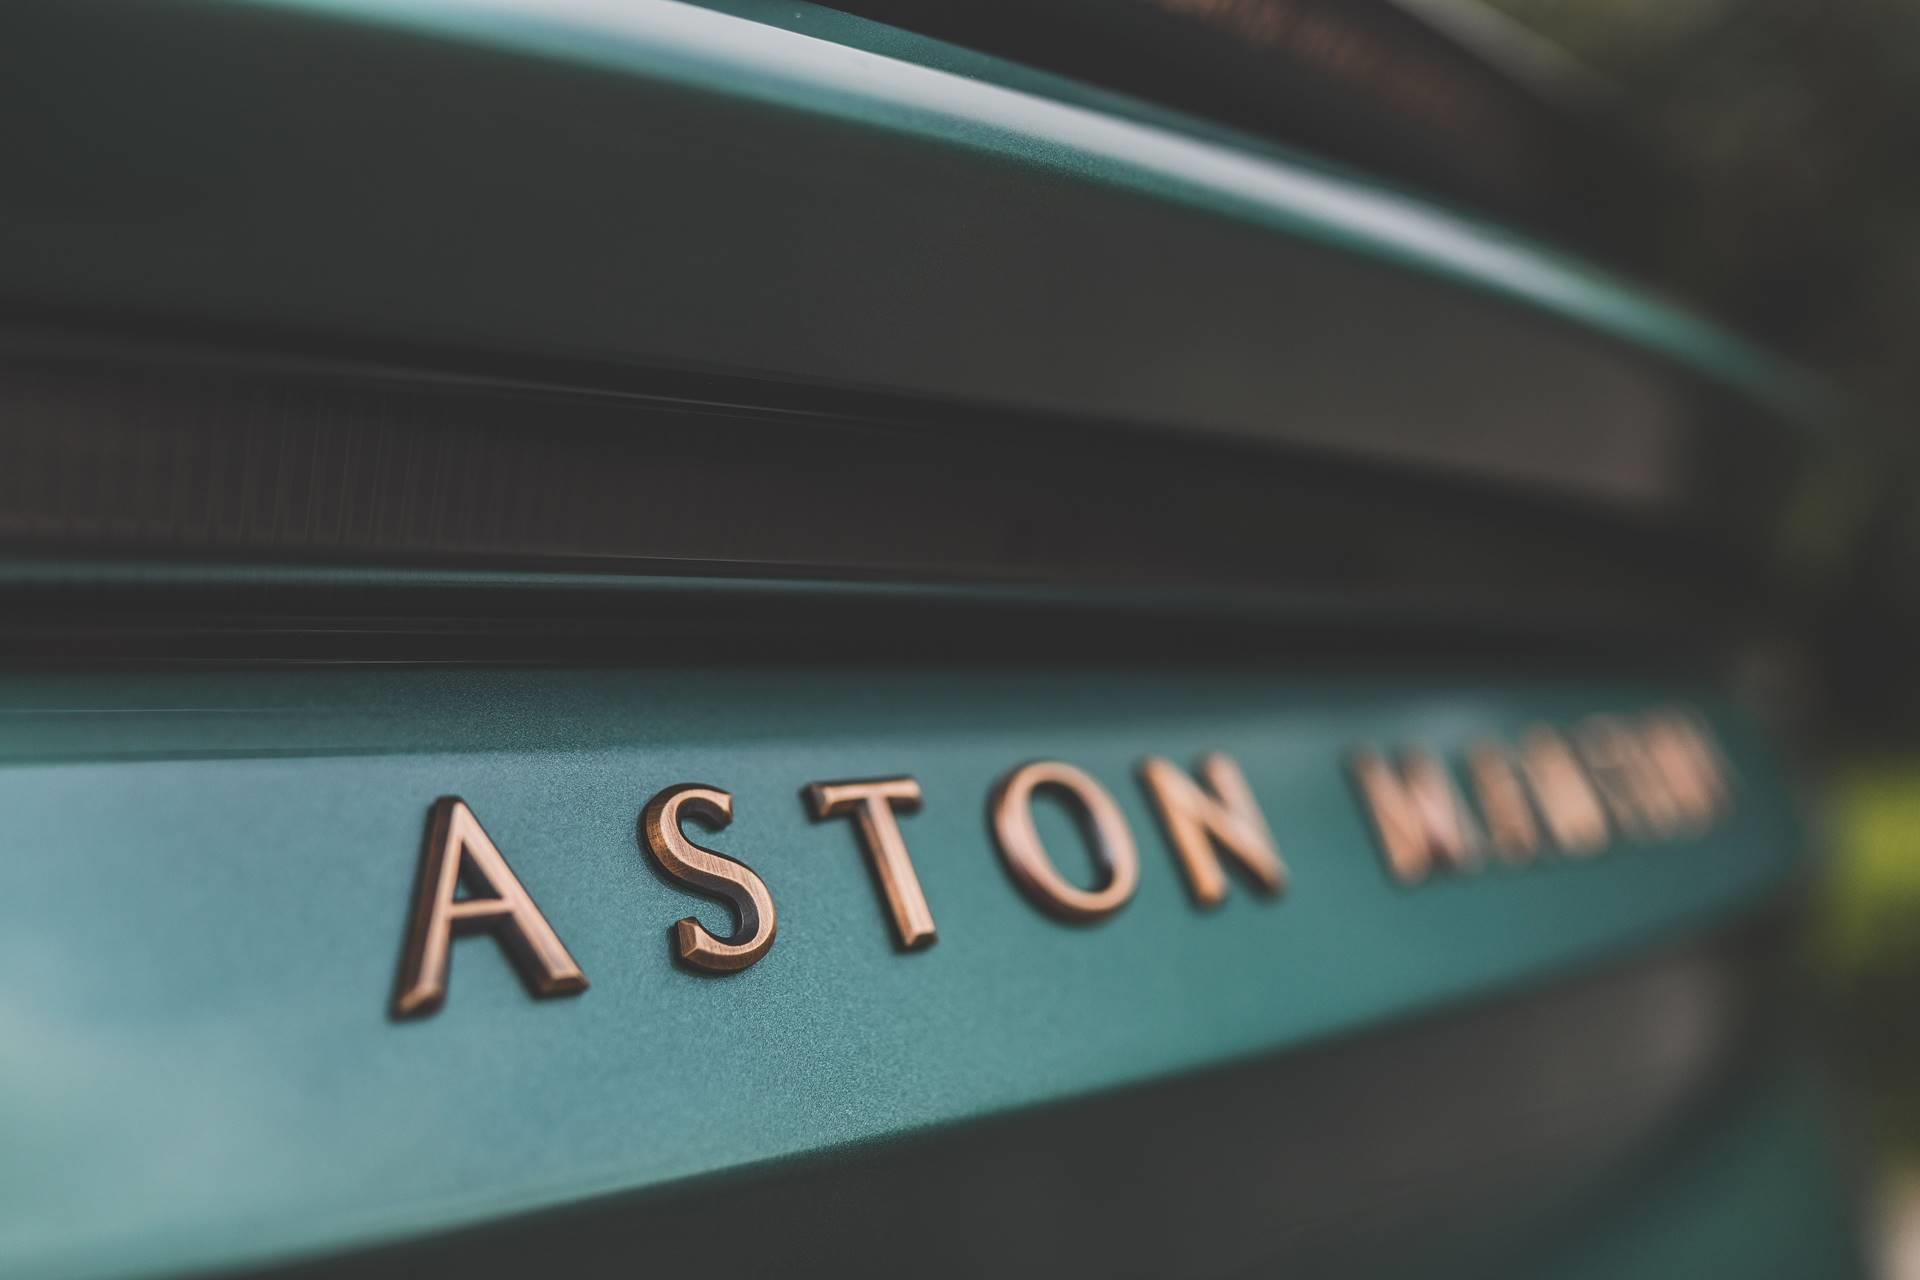 2019 Aston Martin Lagonda DBS 59 Edition